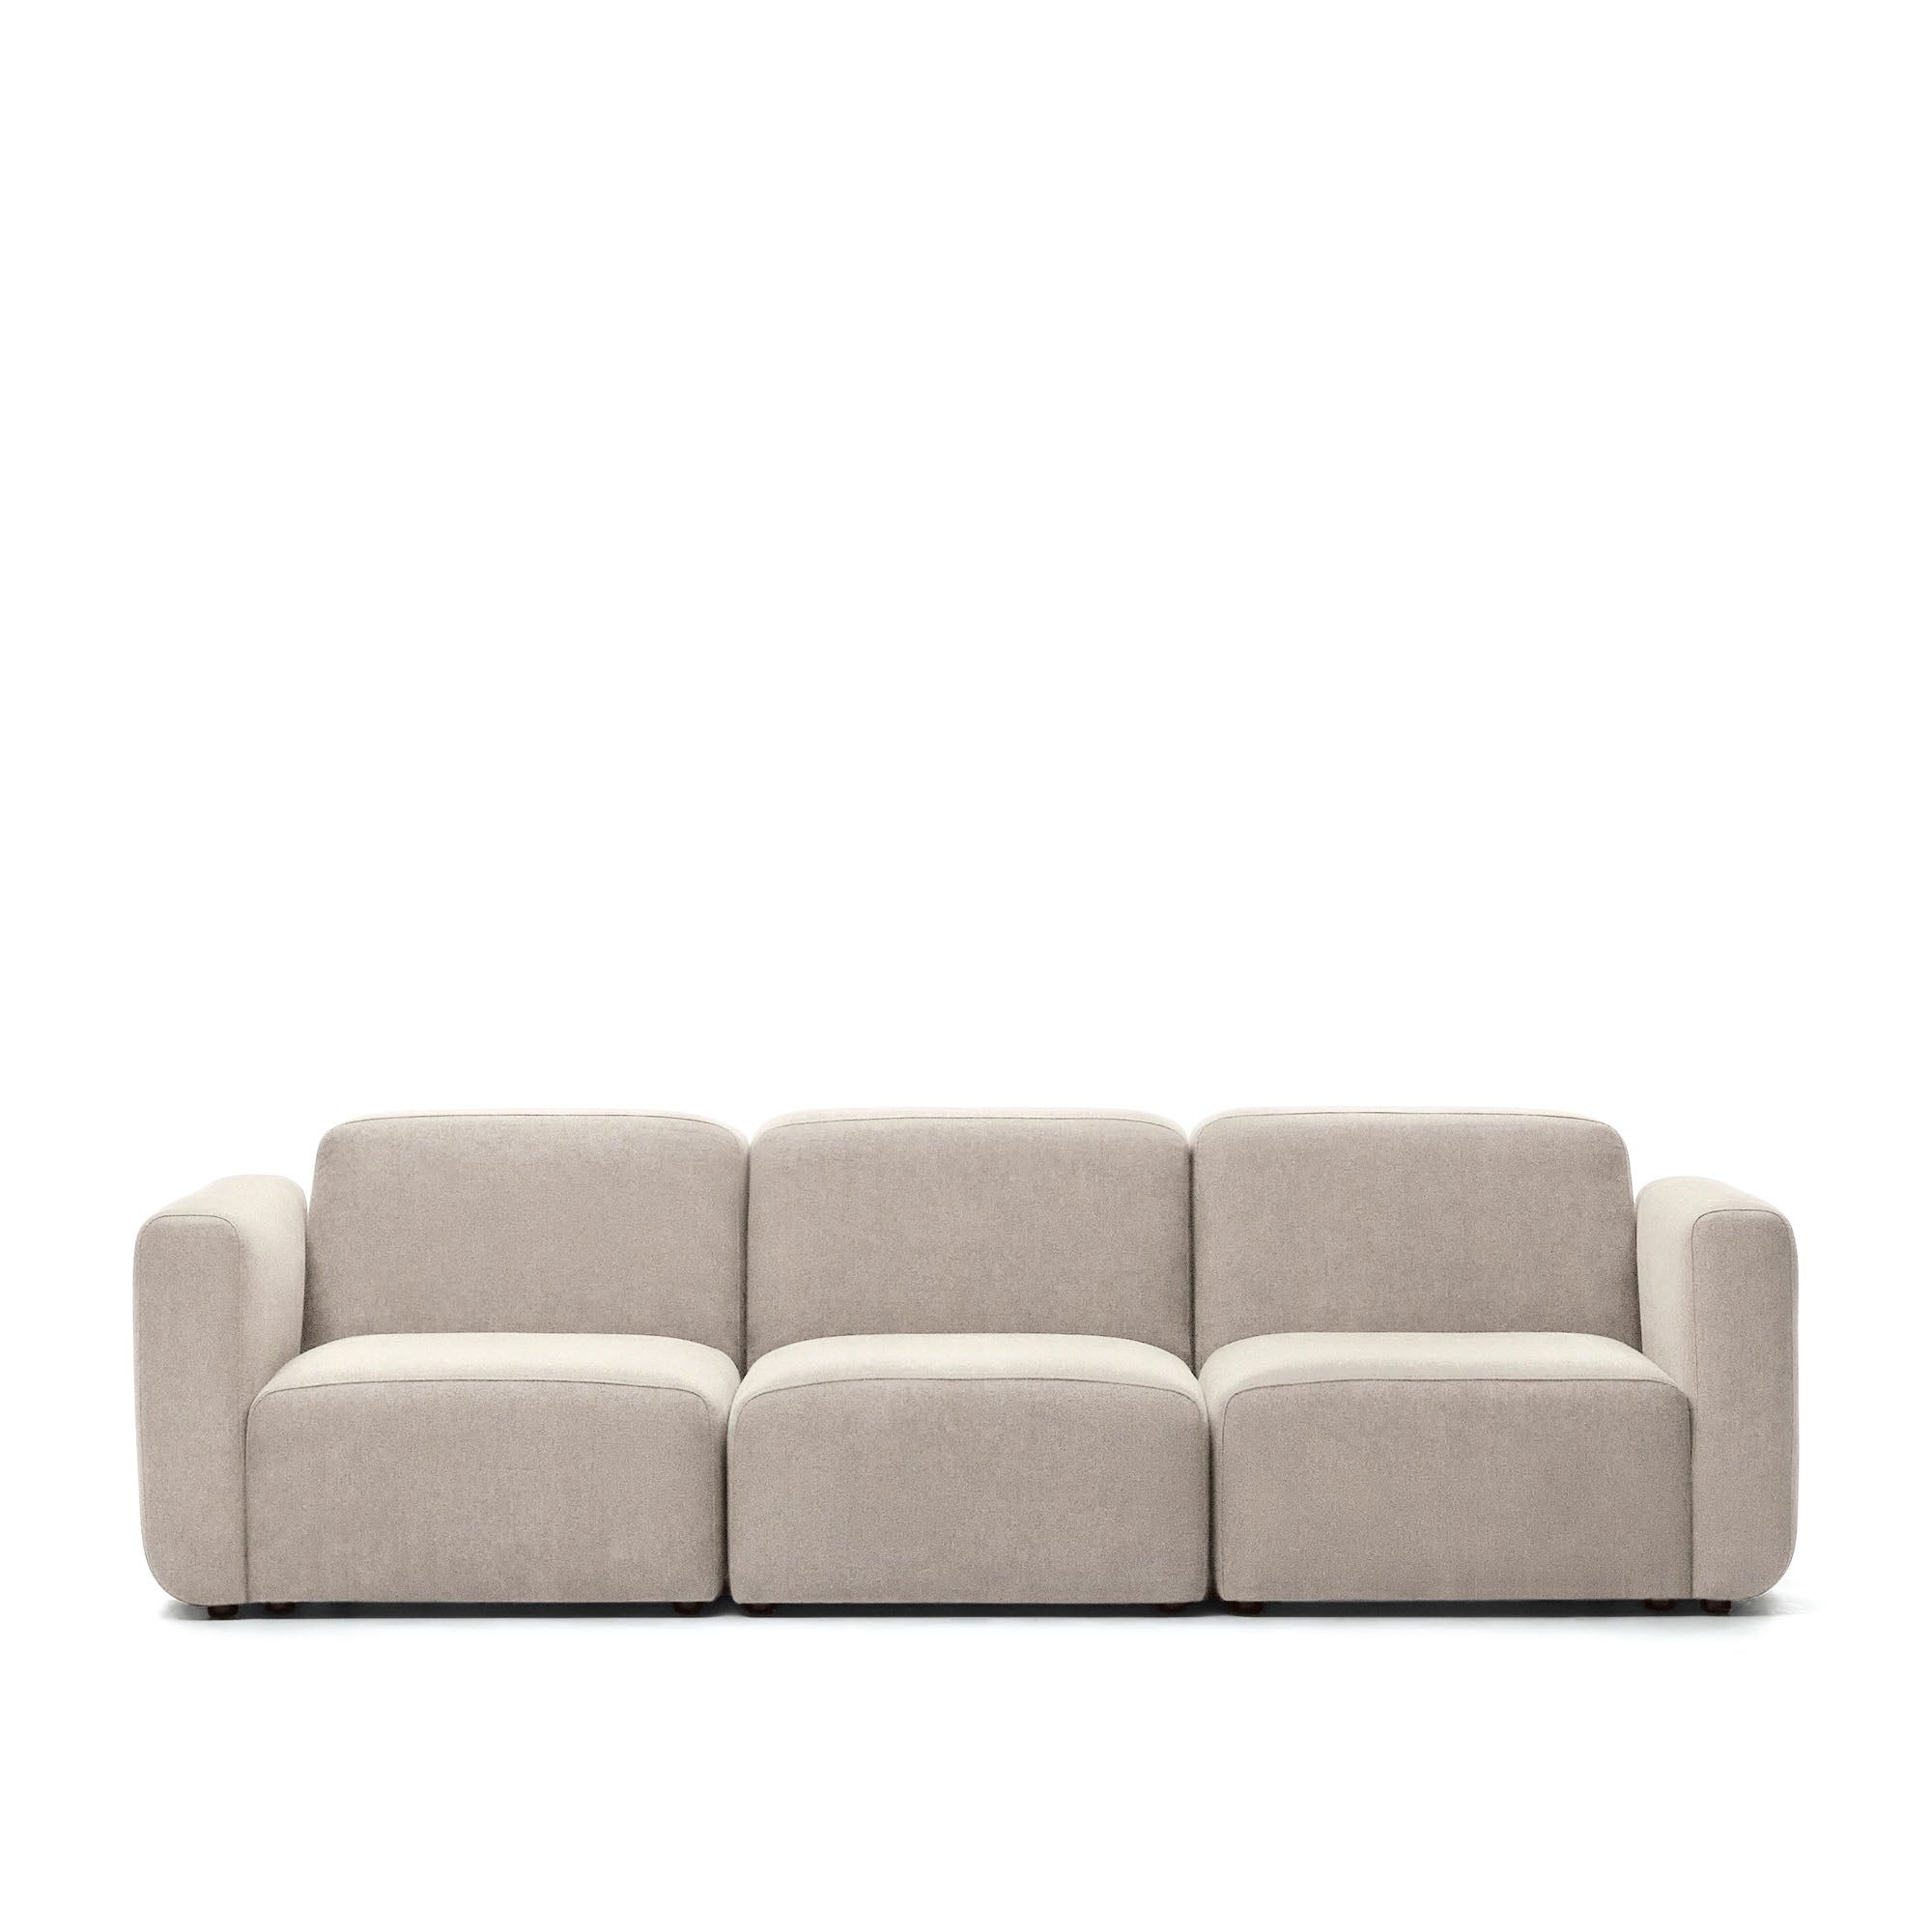 Neom 3 seater modular sofa in beige, 263 cm